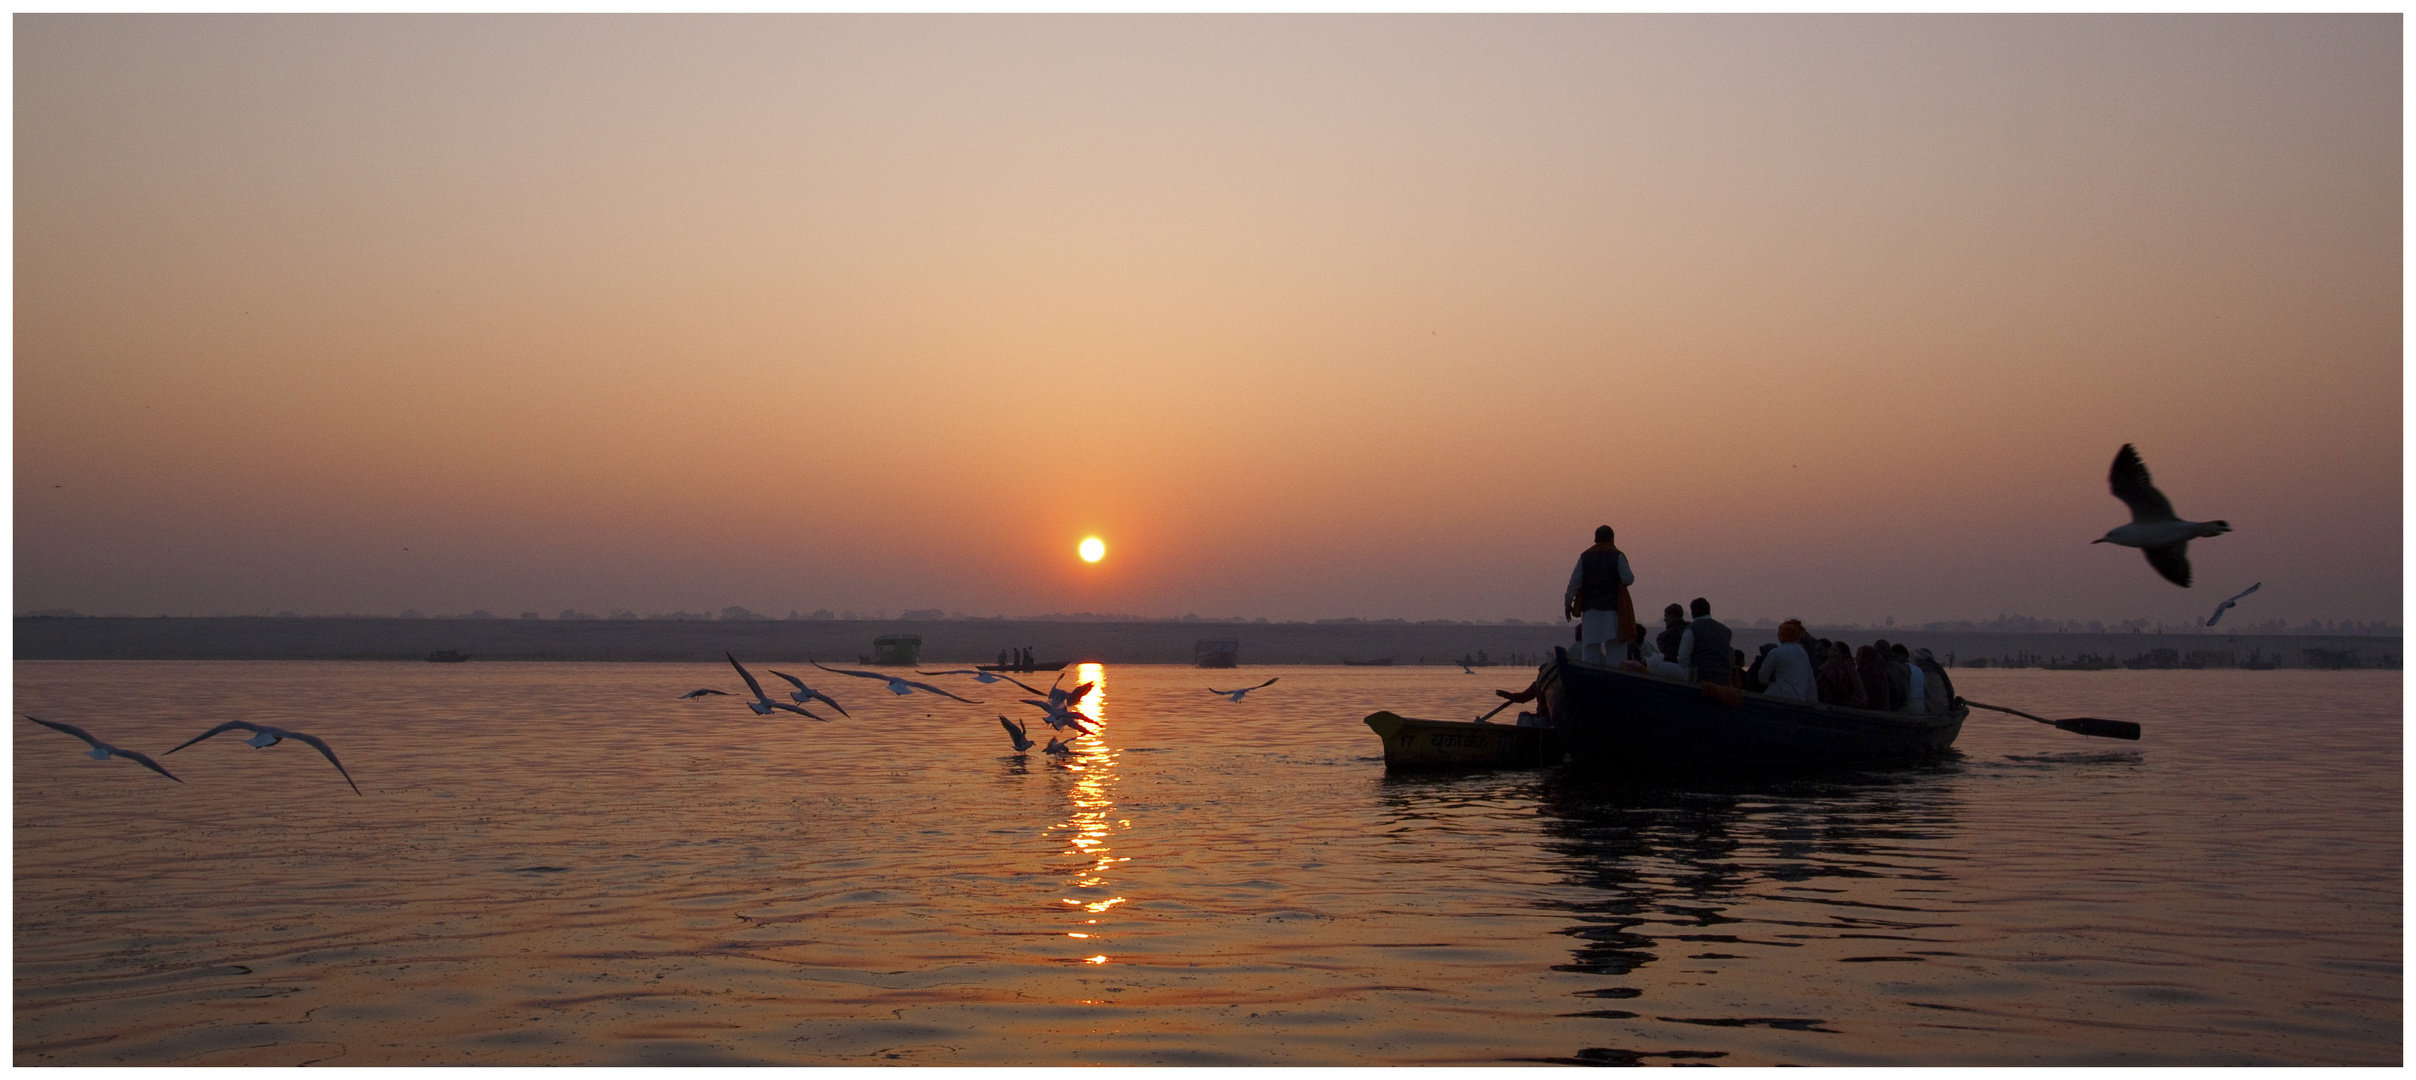 Guten Morgen Holy River Ganga!